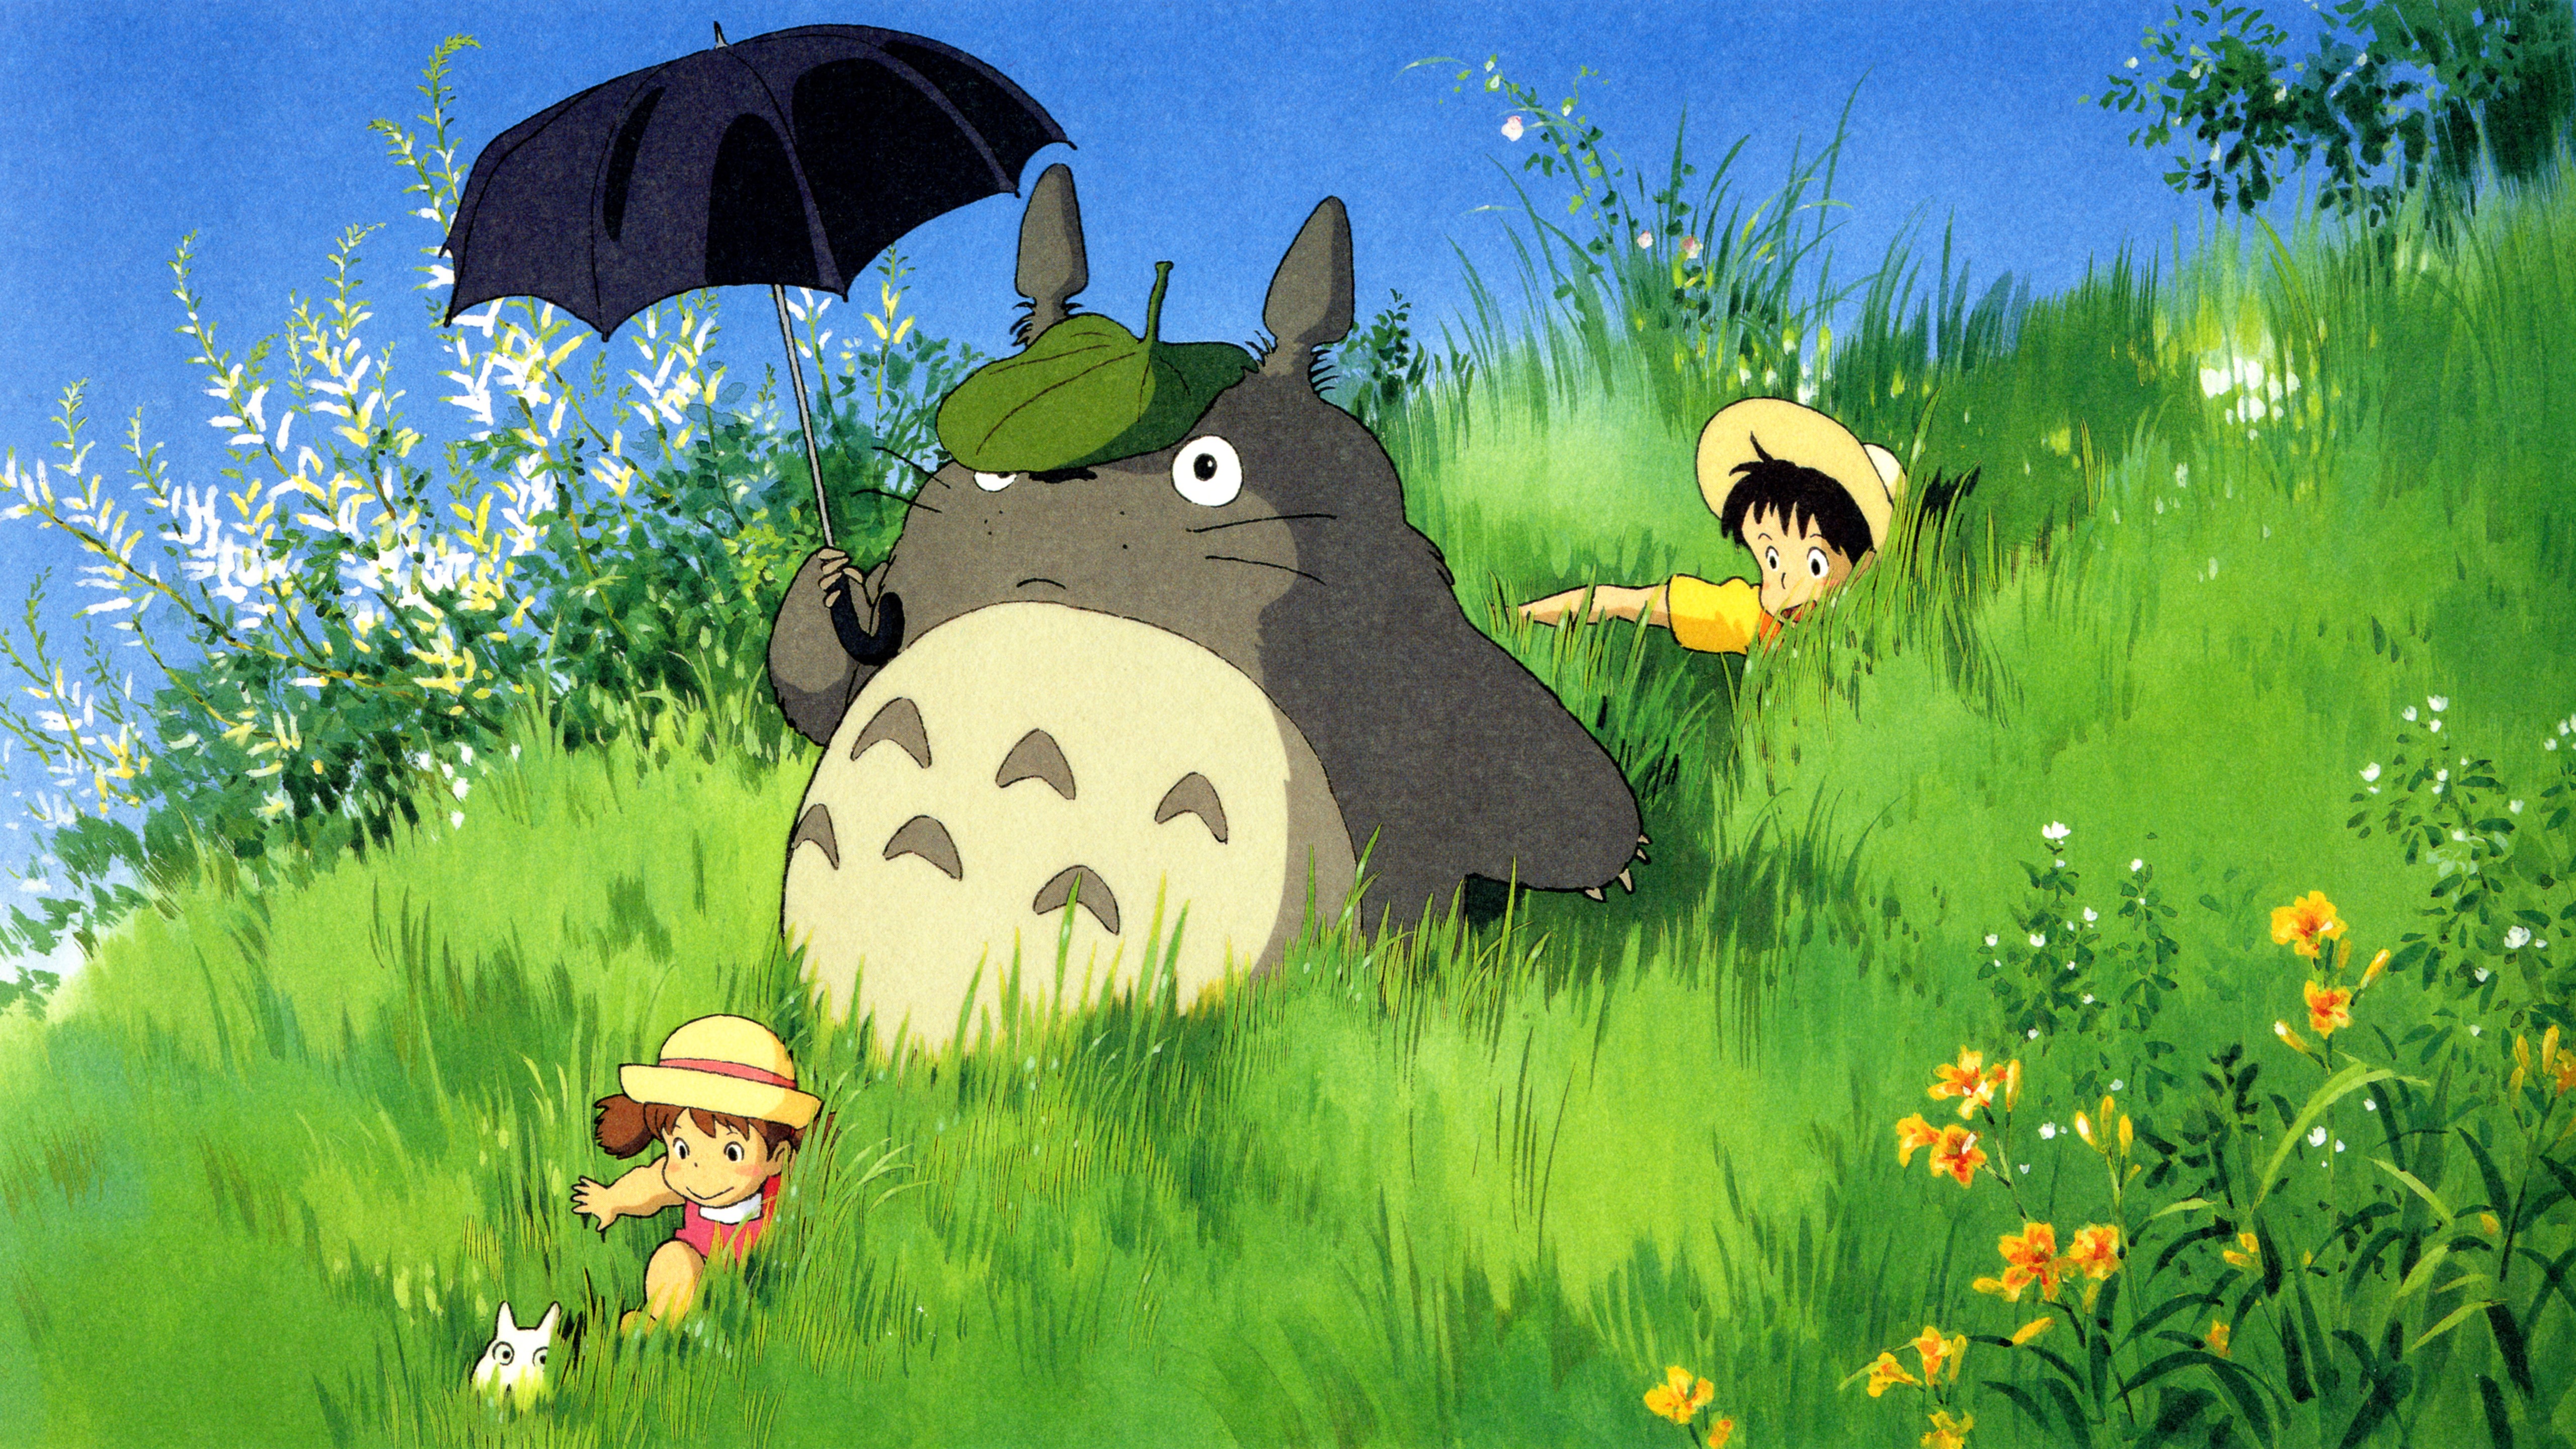 Wallpaper My Neighbor Totoro, classic anime 5120x2880 UHD 5K Picture, Image